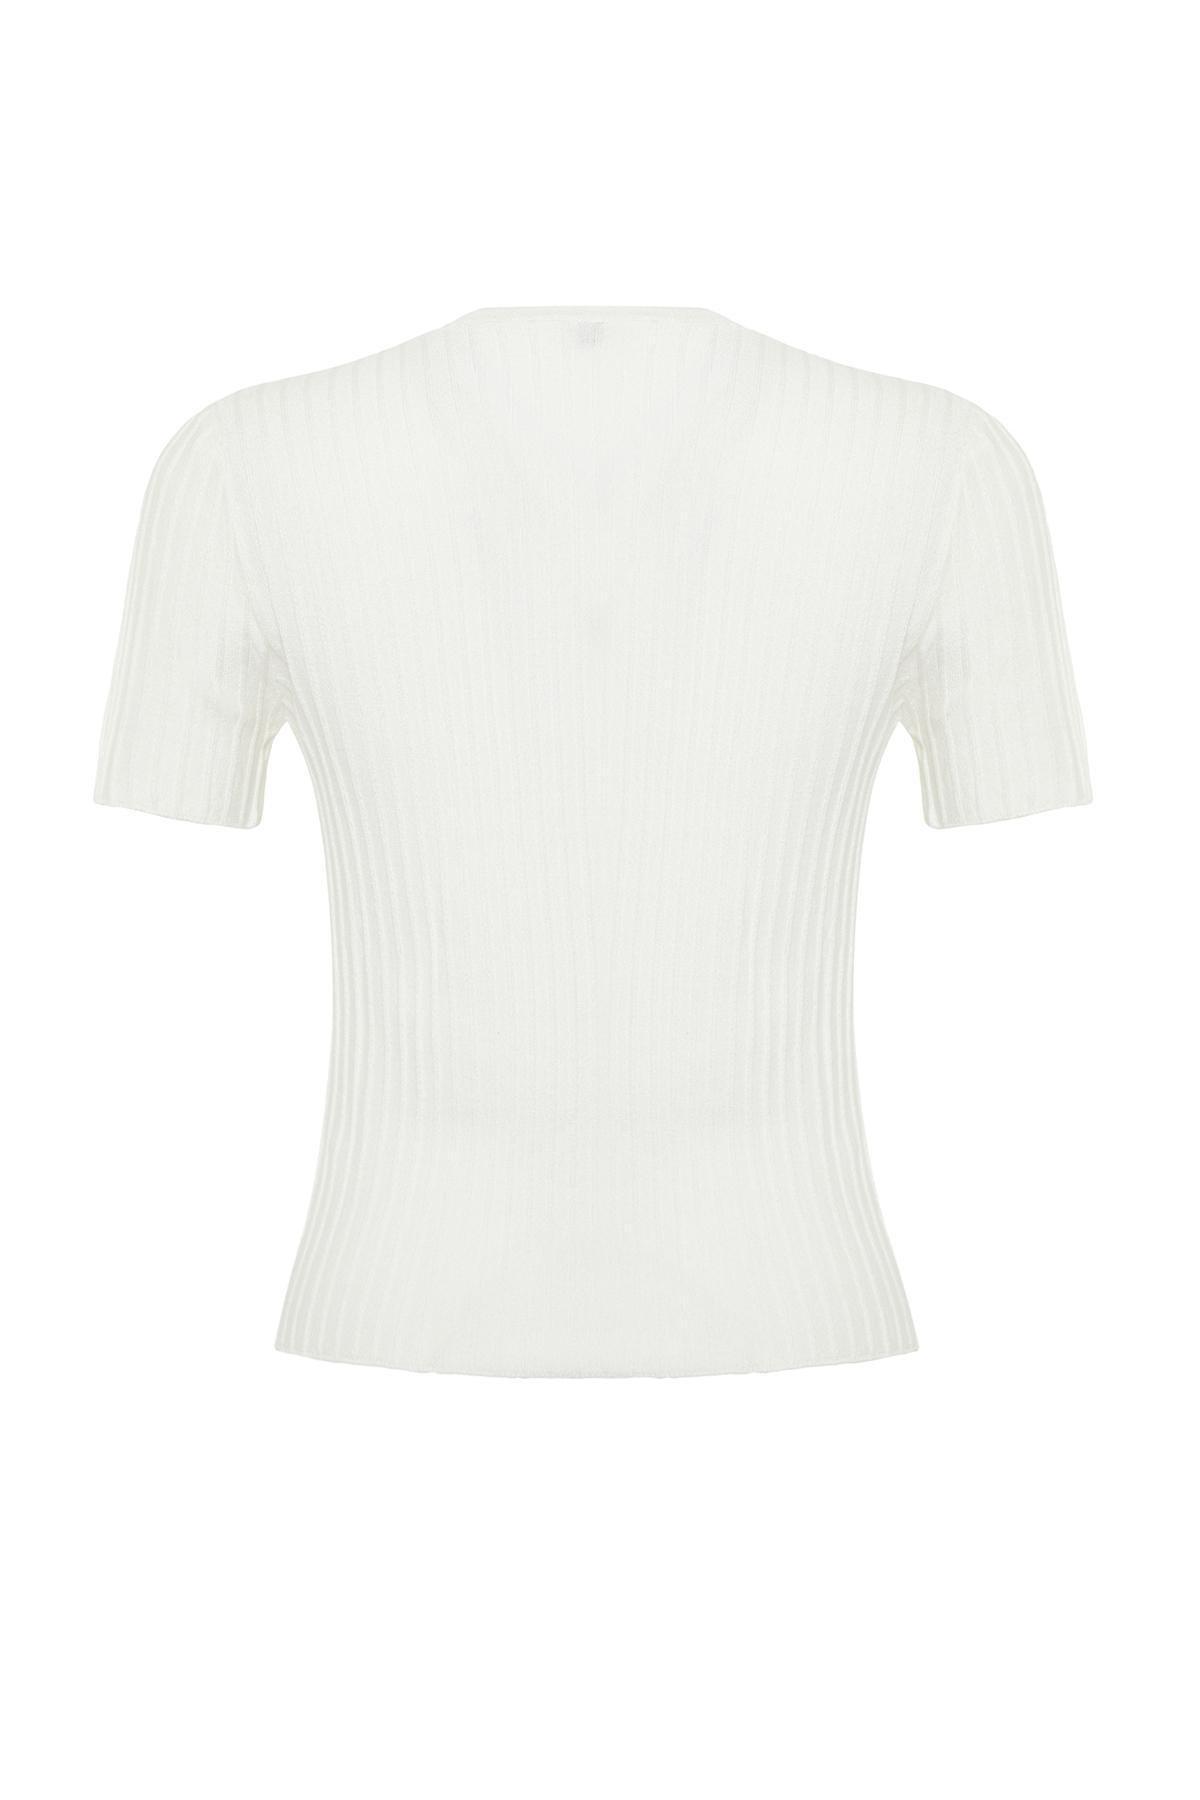 Trendyol - Cream Double Breasted Knitwear T-Shirt